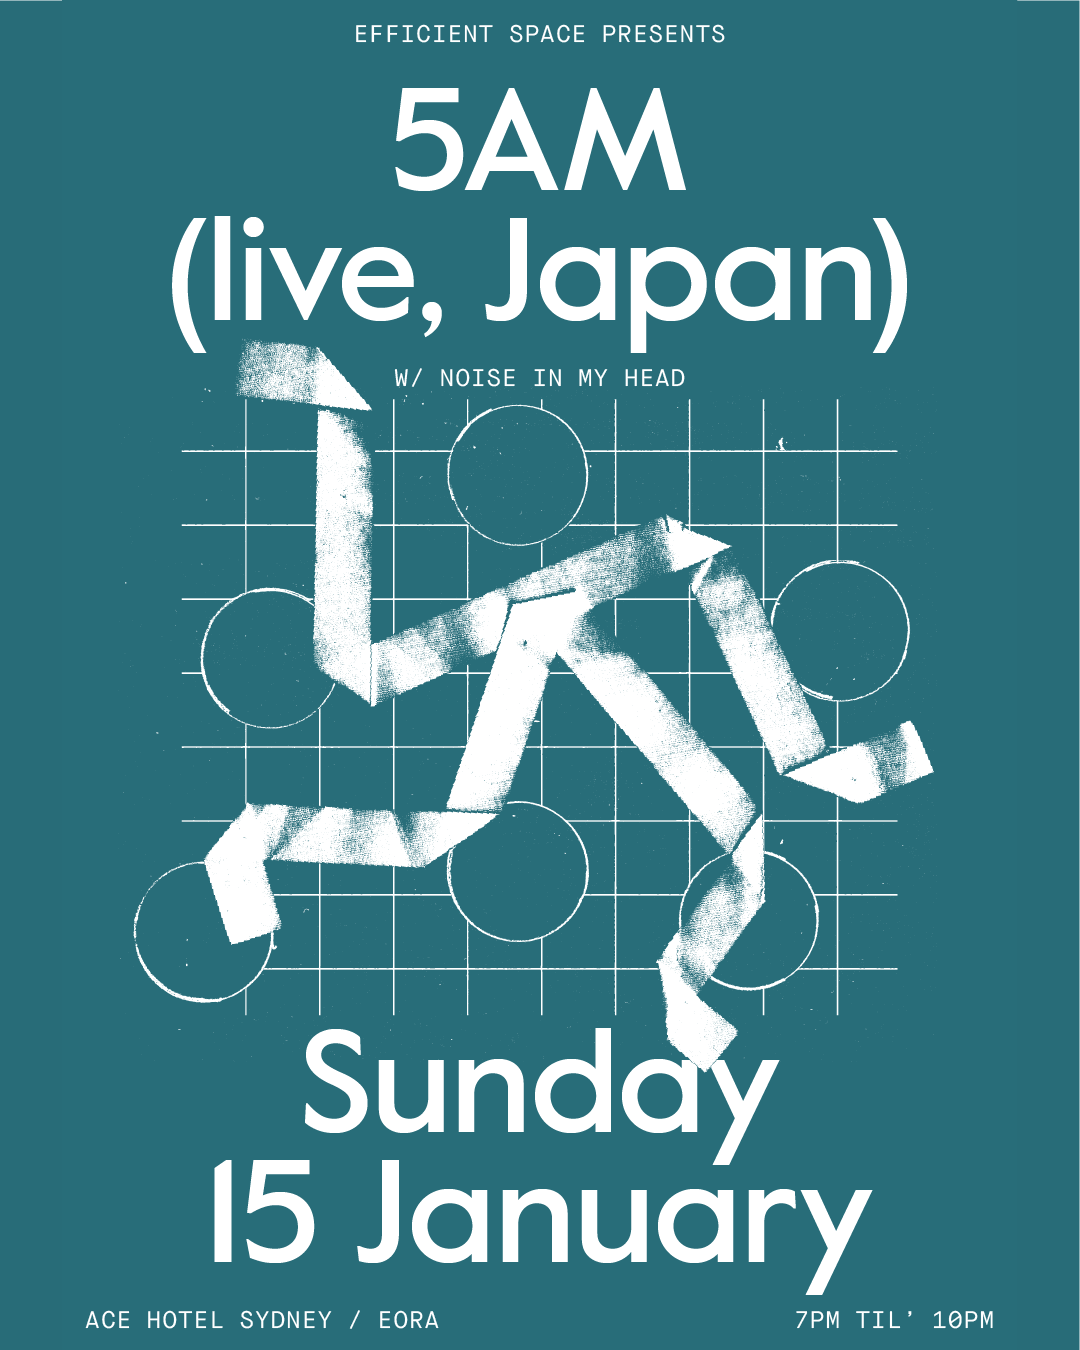 Efficient Space presents 5AM (Live) promo - January 15